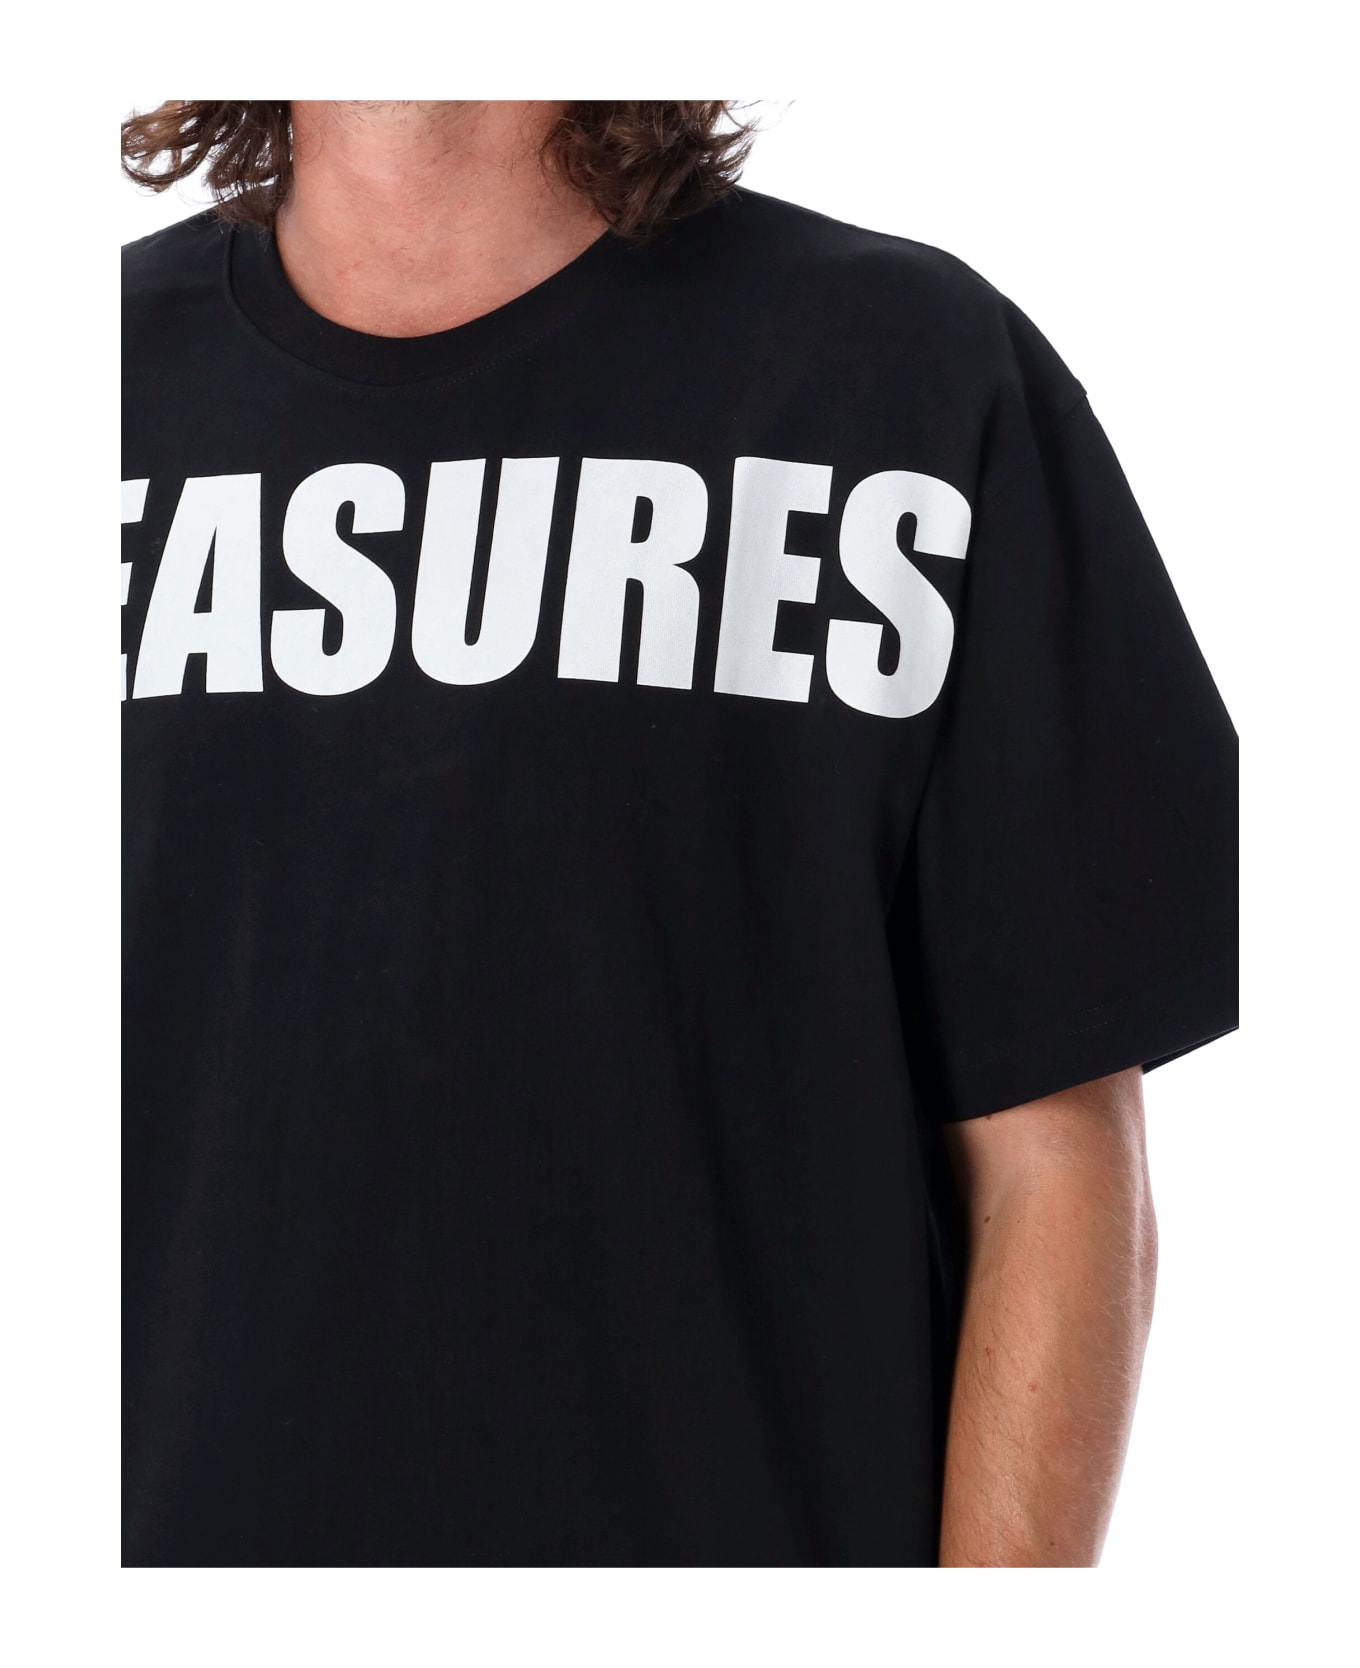 Pleasures Expand Heavyweight T-shirt - BLACK